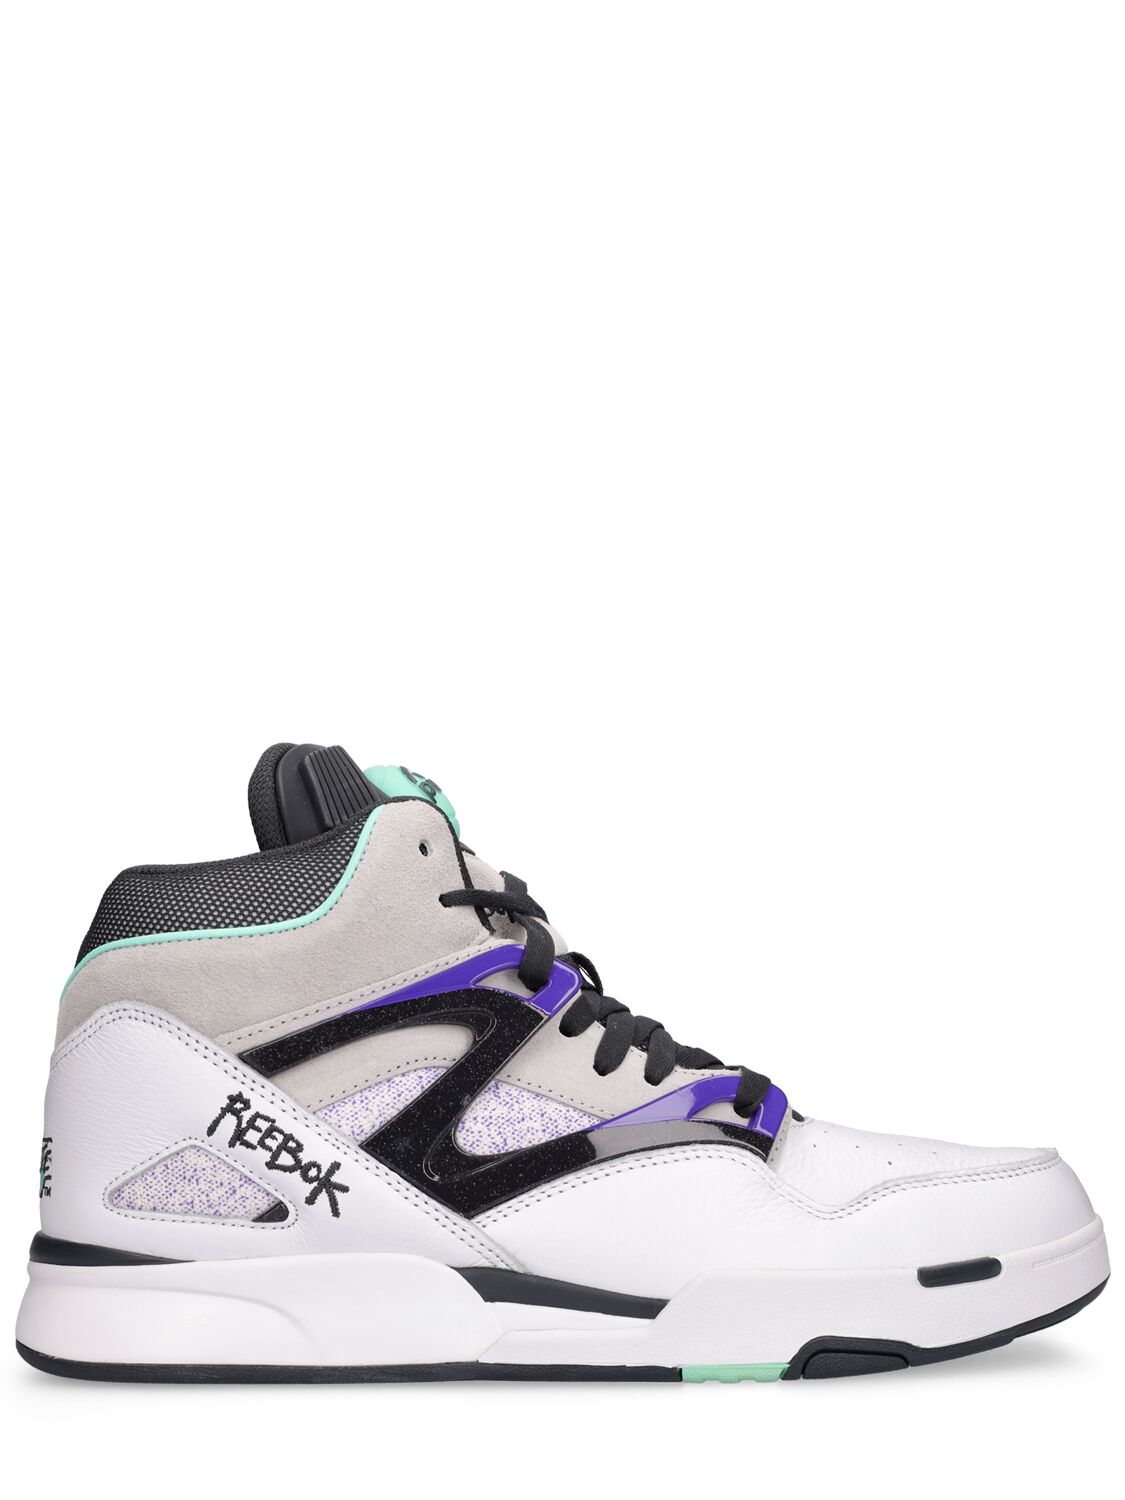 Reebok Pump Omnizone Ii Sneakers In White,purple |